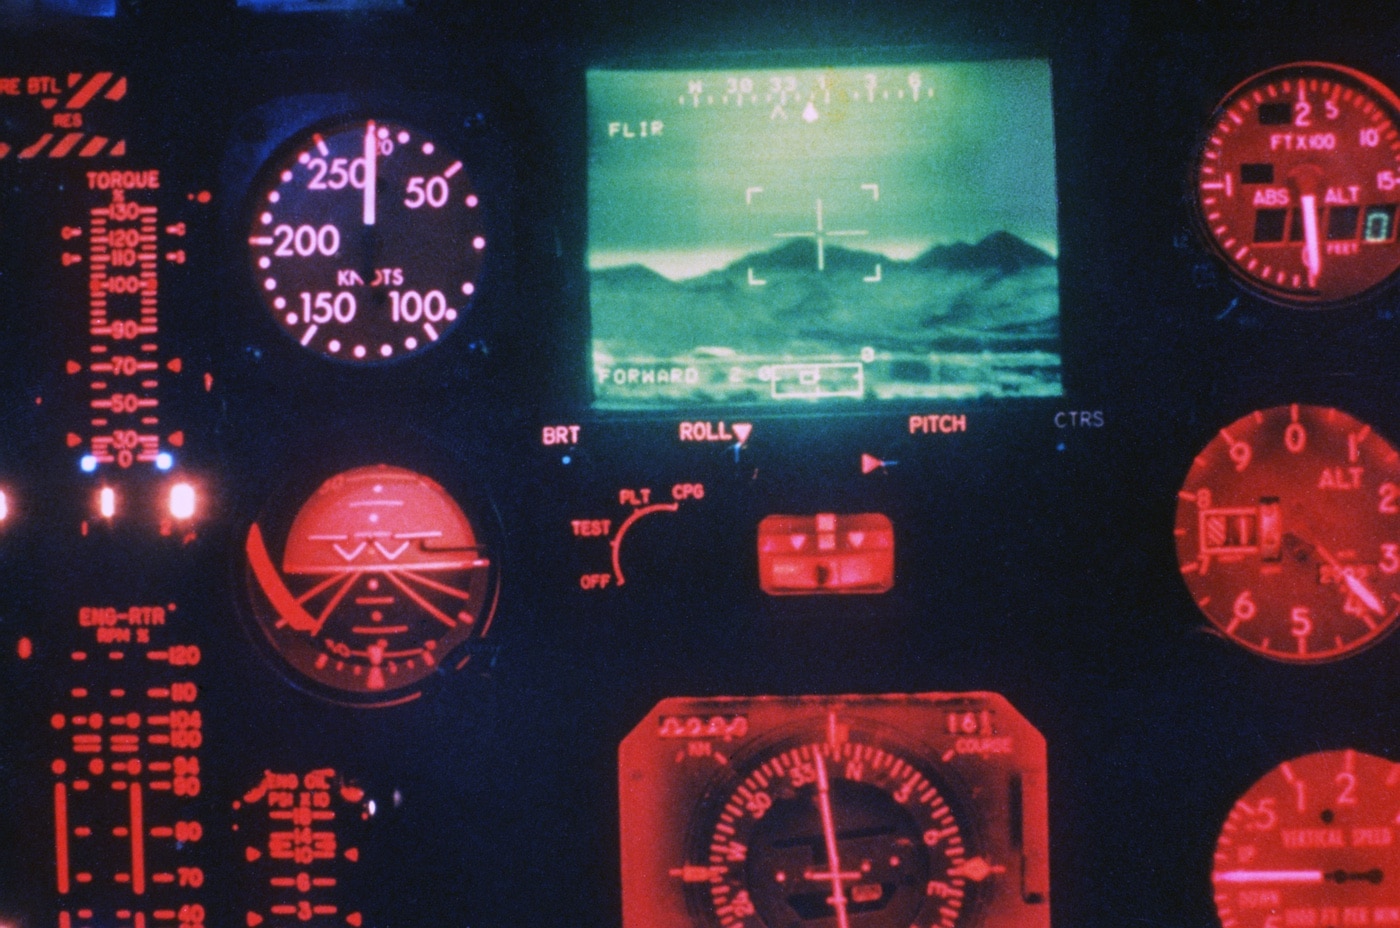 cockpit simulator for ah-64 apache